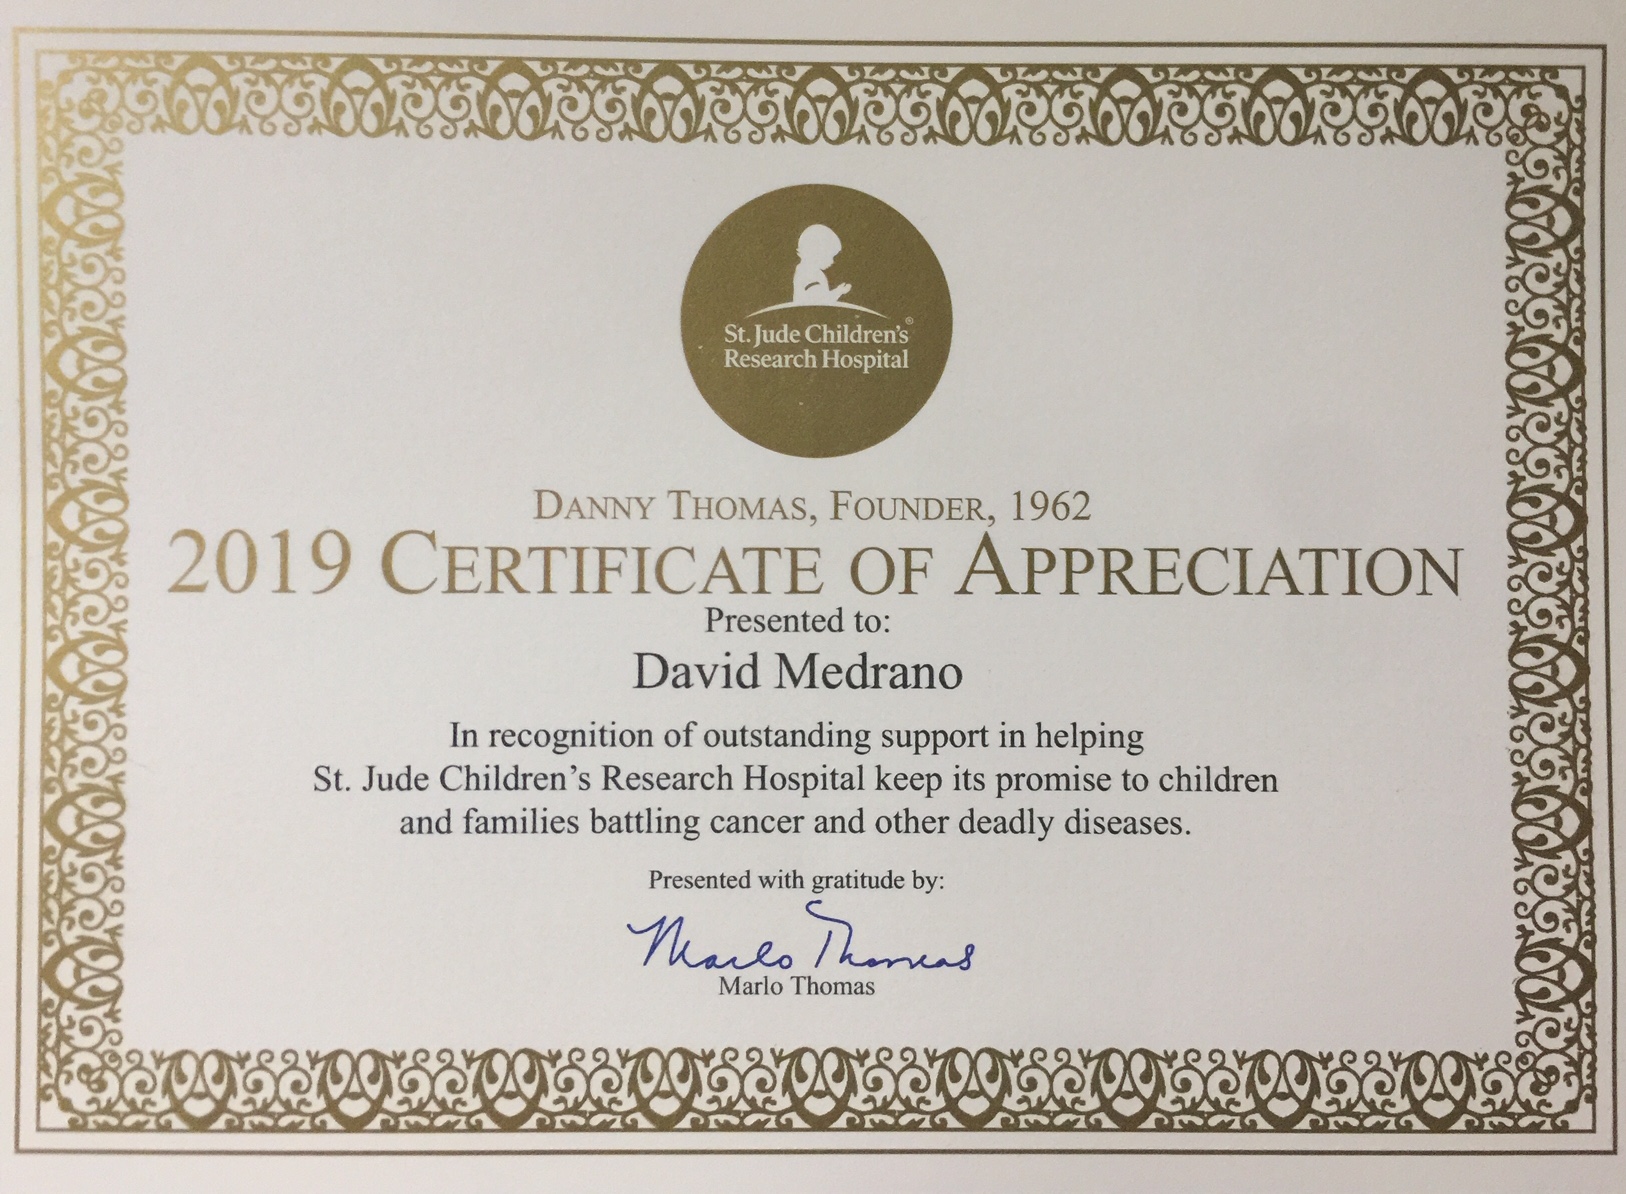 st. jude children's research hospital 2019 certificate of appreciation